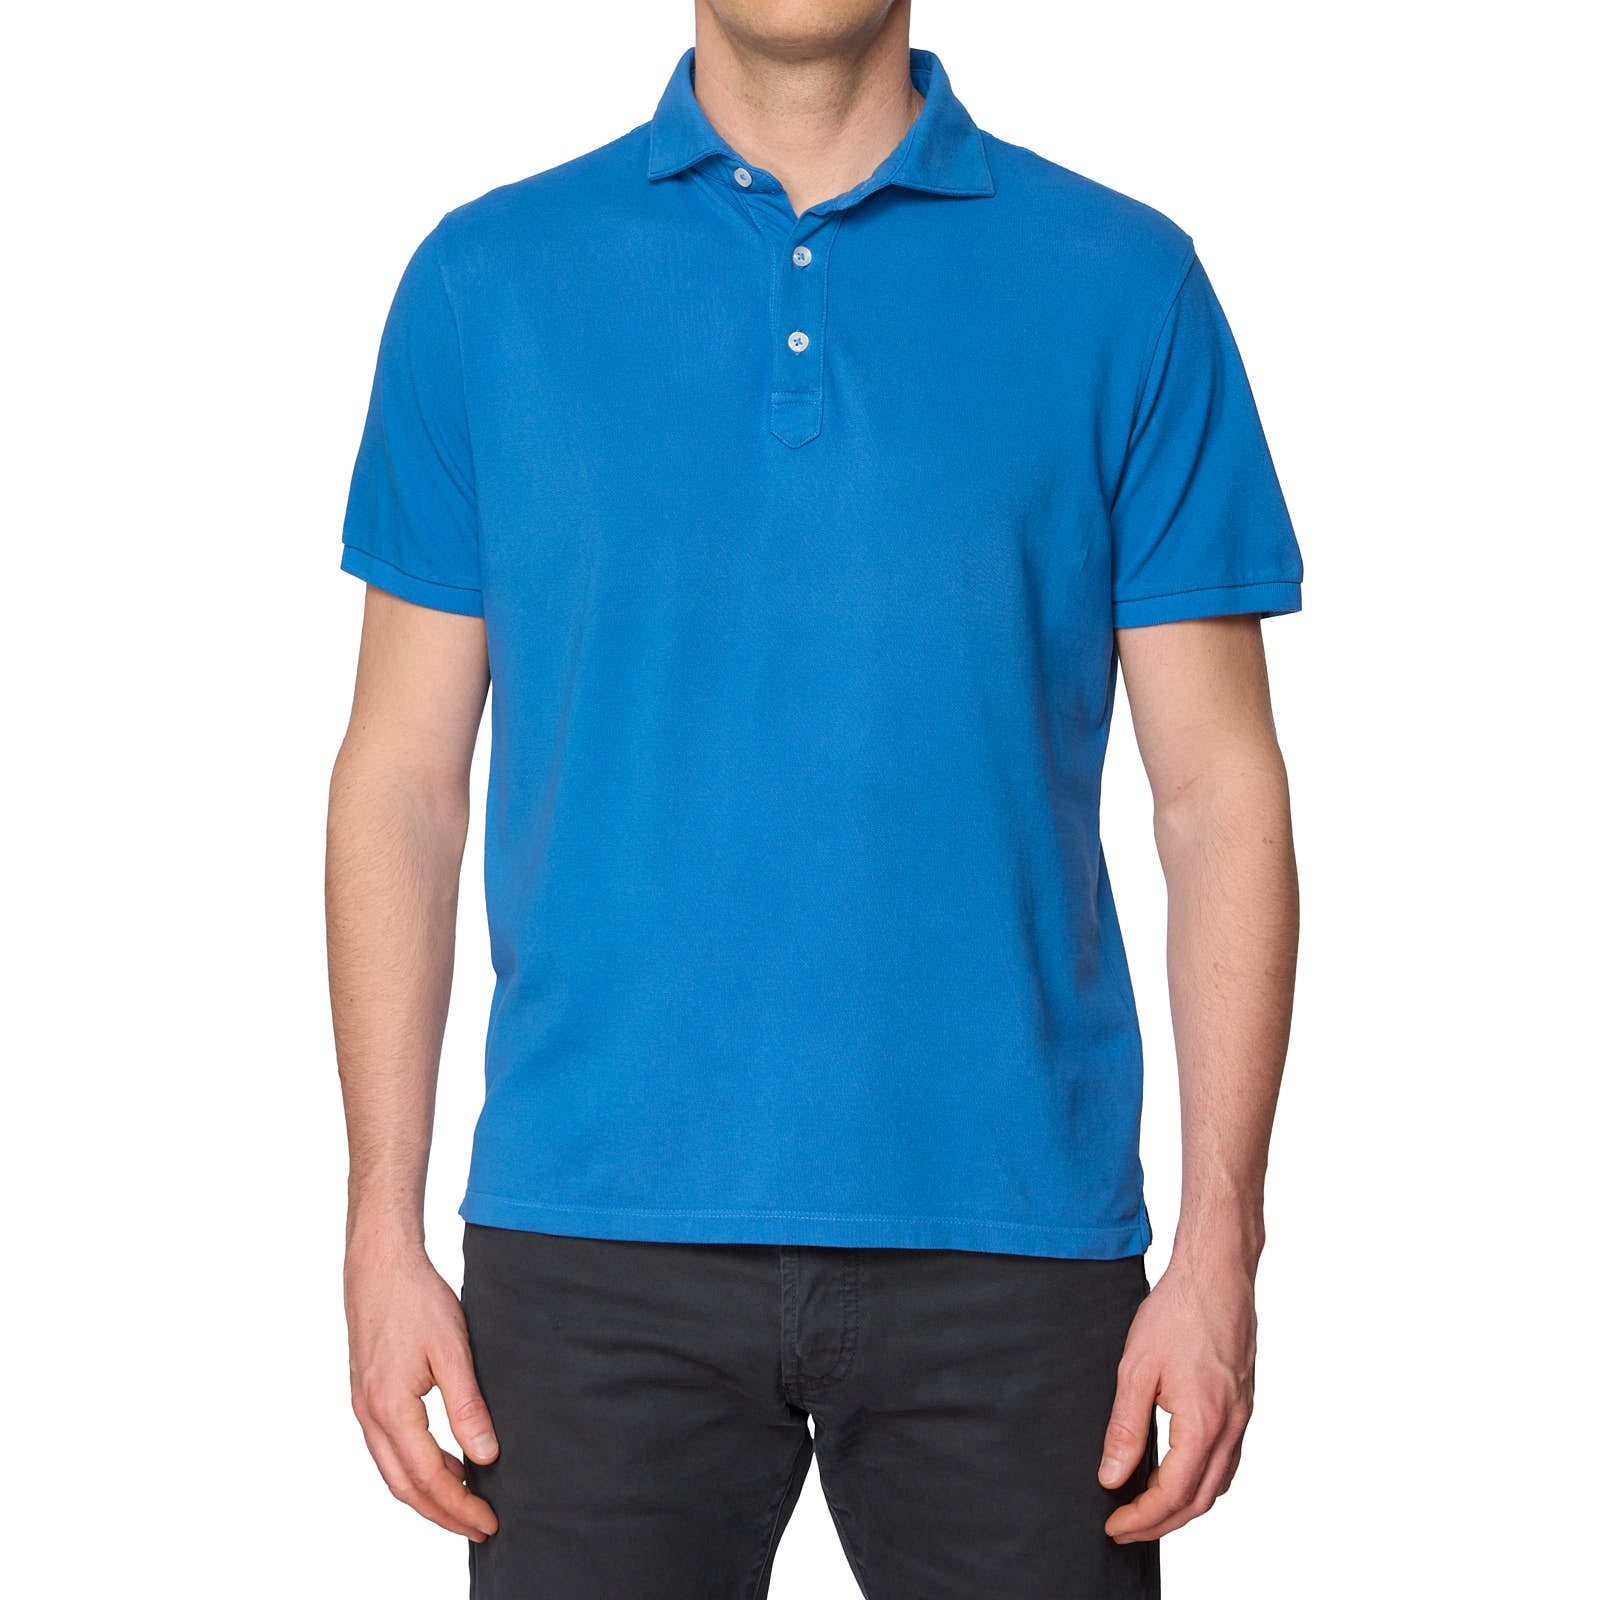 BORGONERO Milano Denim Blue Cotton Polo Shirt NEW L